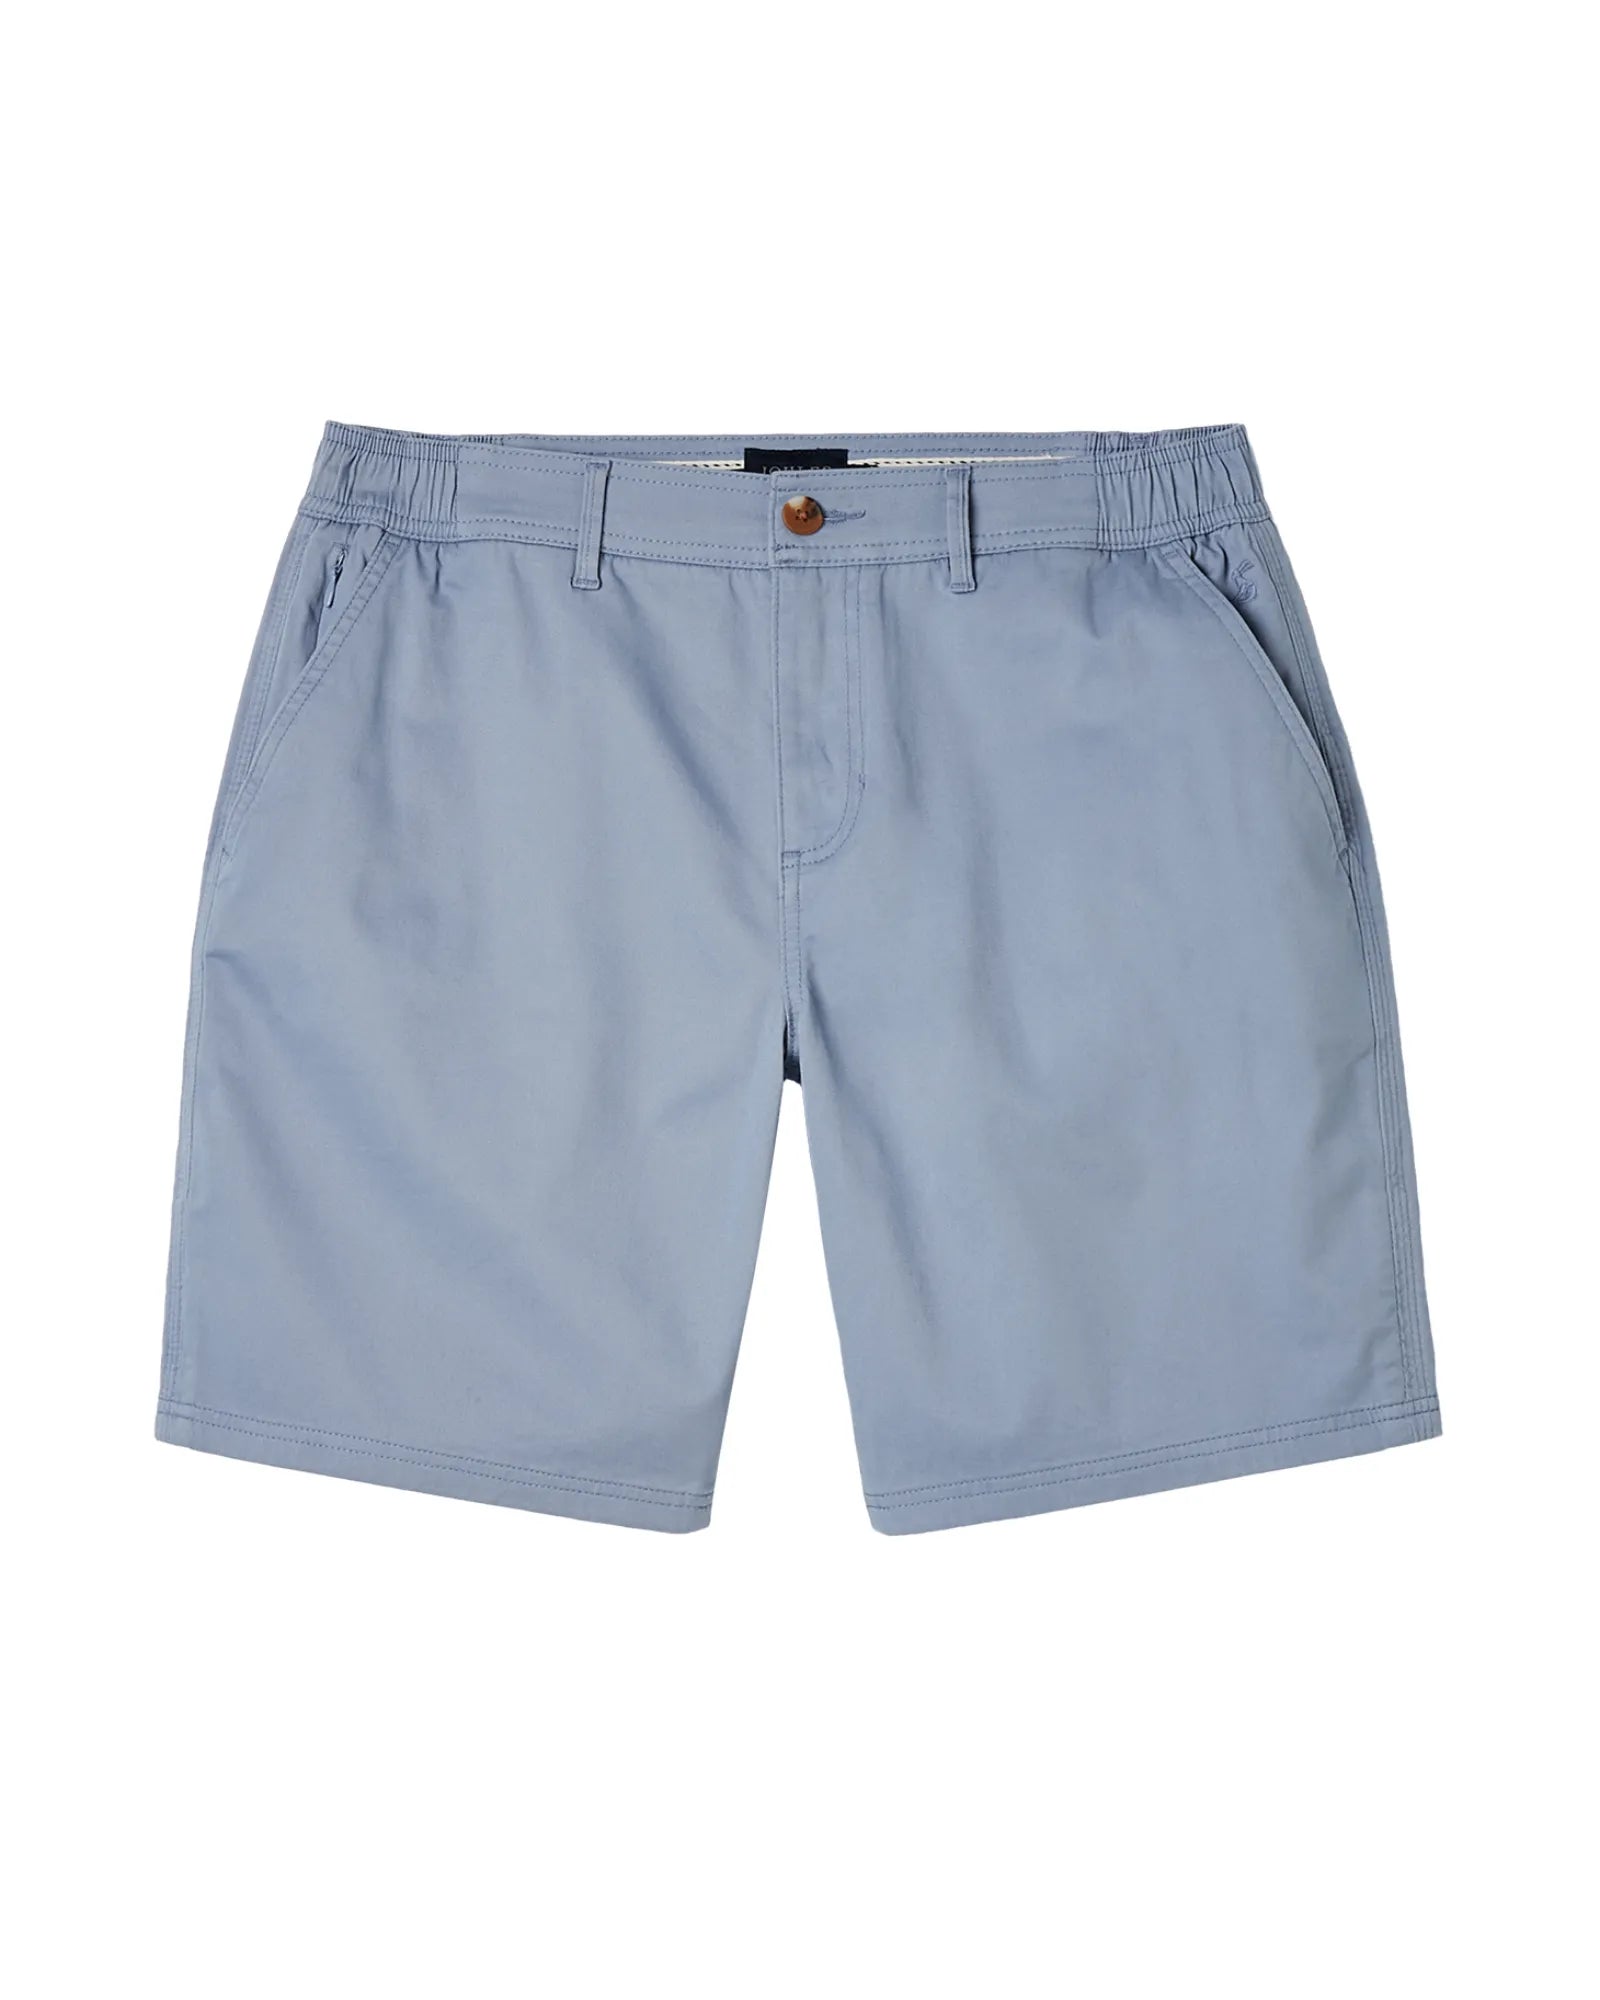 Dockside Shorts - Dutch Blue